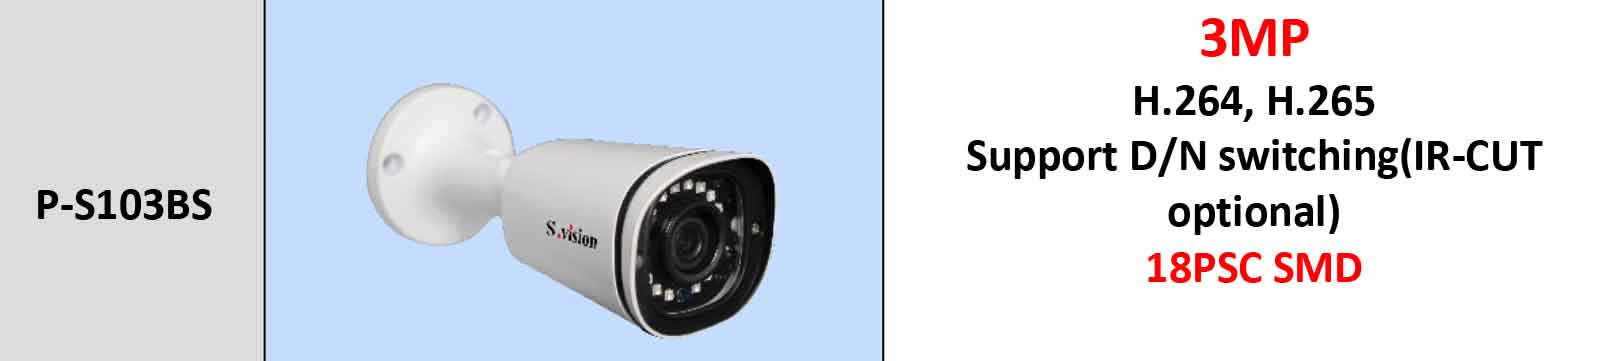 مشخصات دوربین مداربسته بولت اس ویژن مدل Svision P-S103BS 